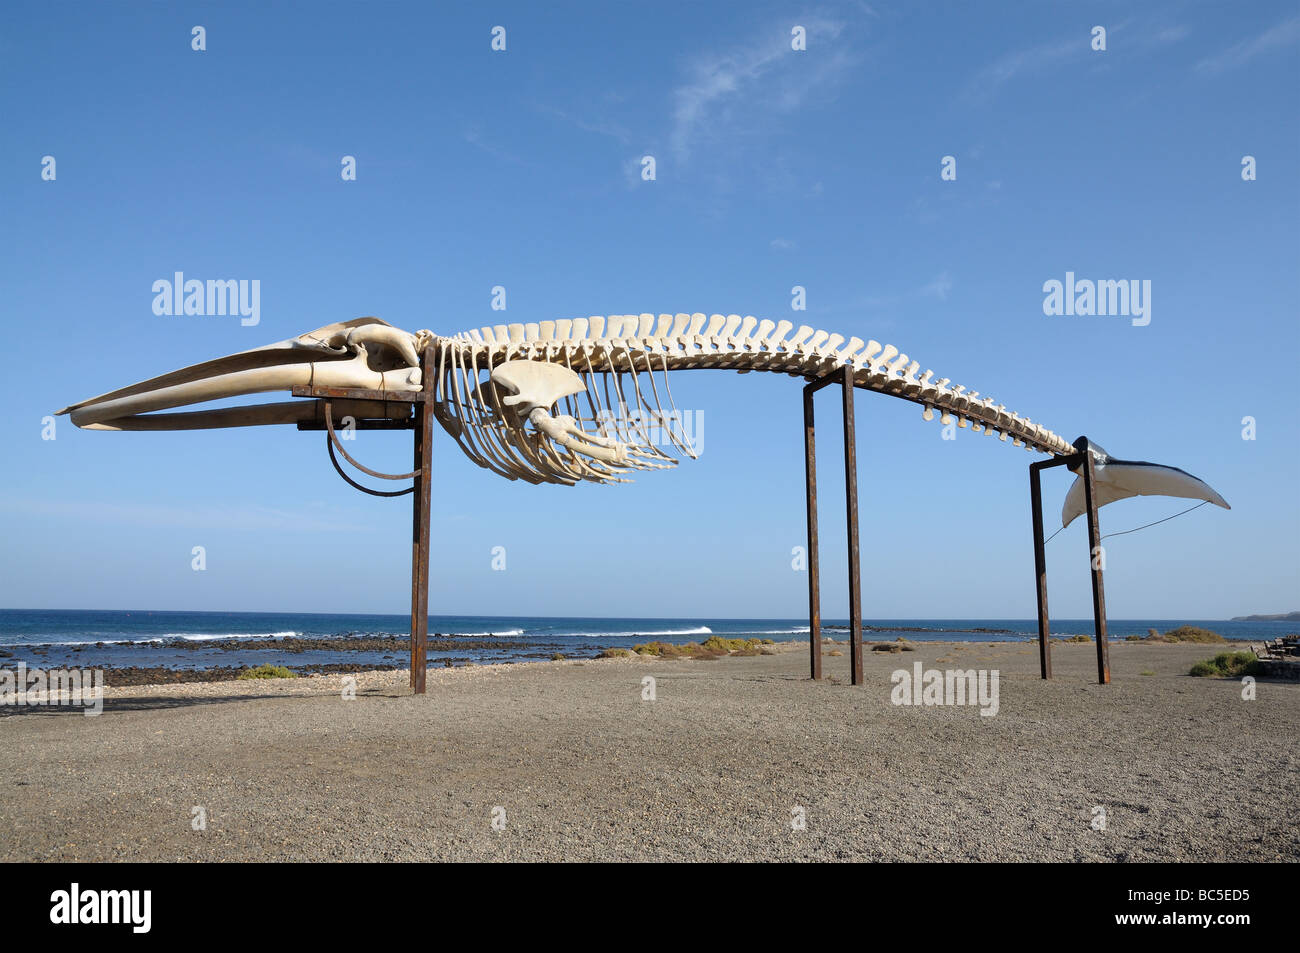 Walskelett in Caleta de Fuste, Fuerteventura Spanien Stockfoto